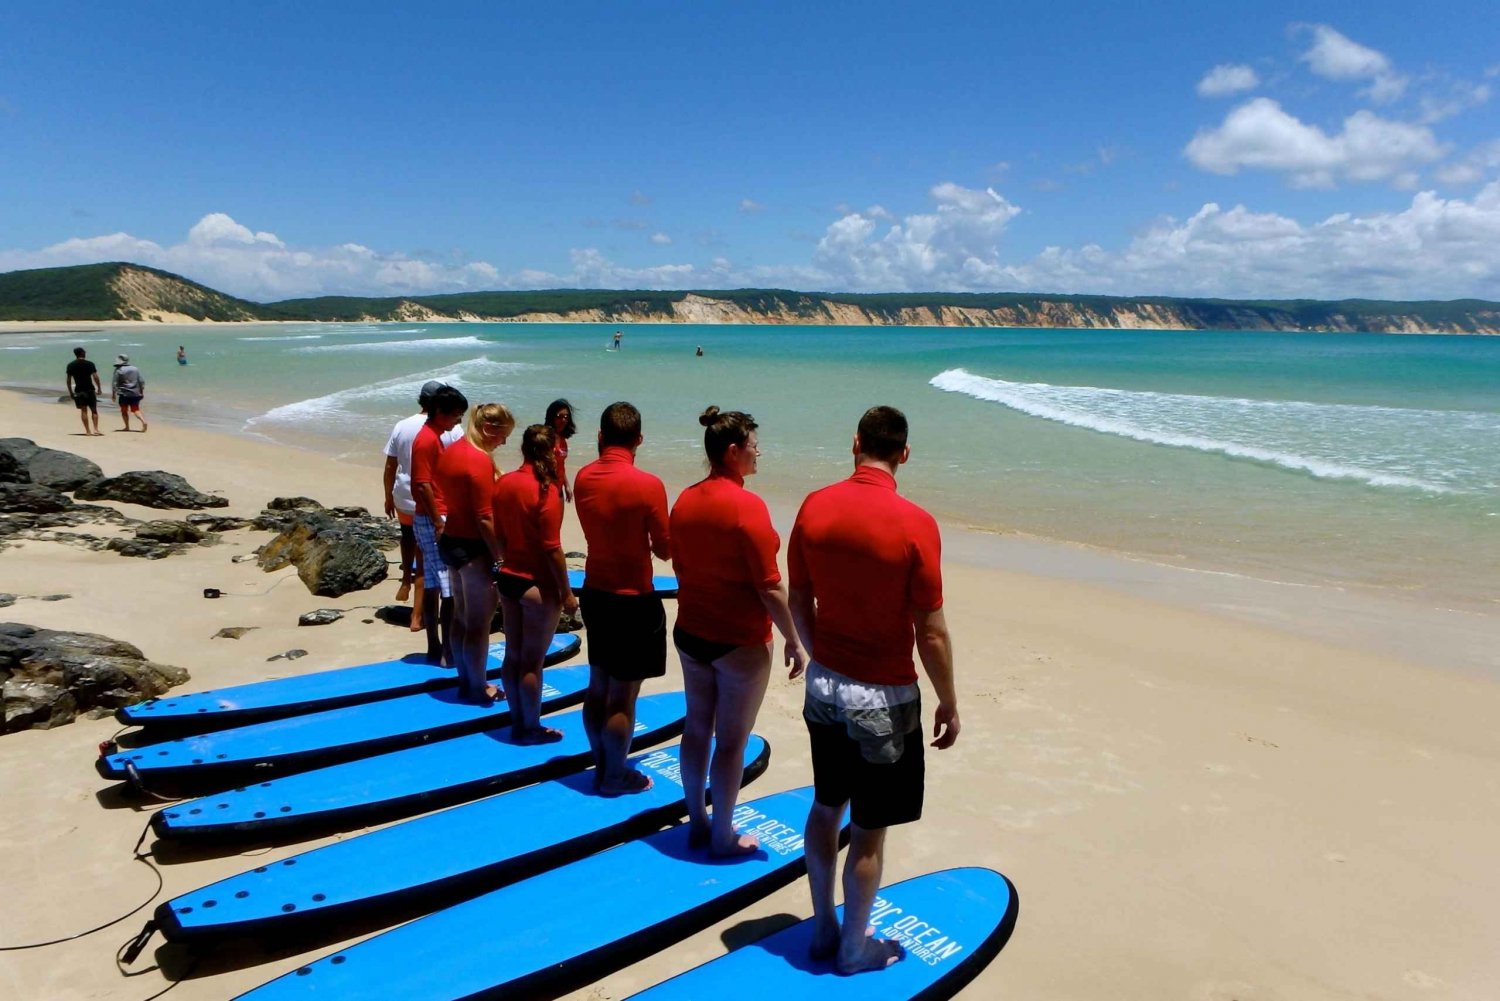 Learn to Surf Australia's Longest Wave & Beach Drive Tour